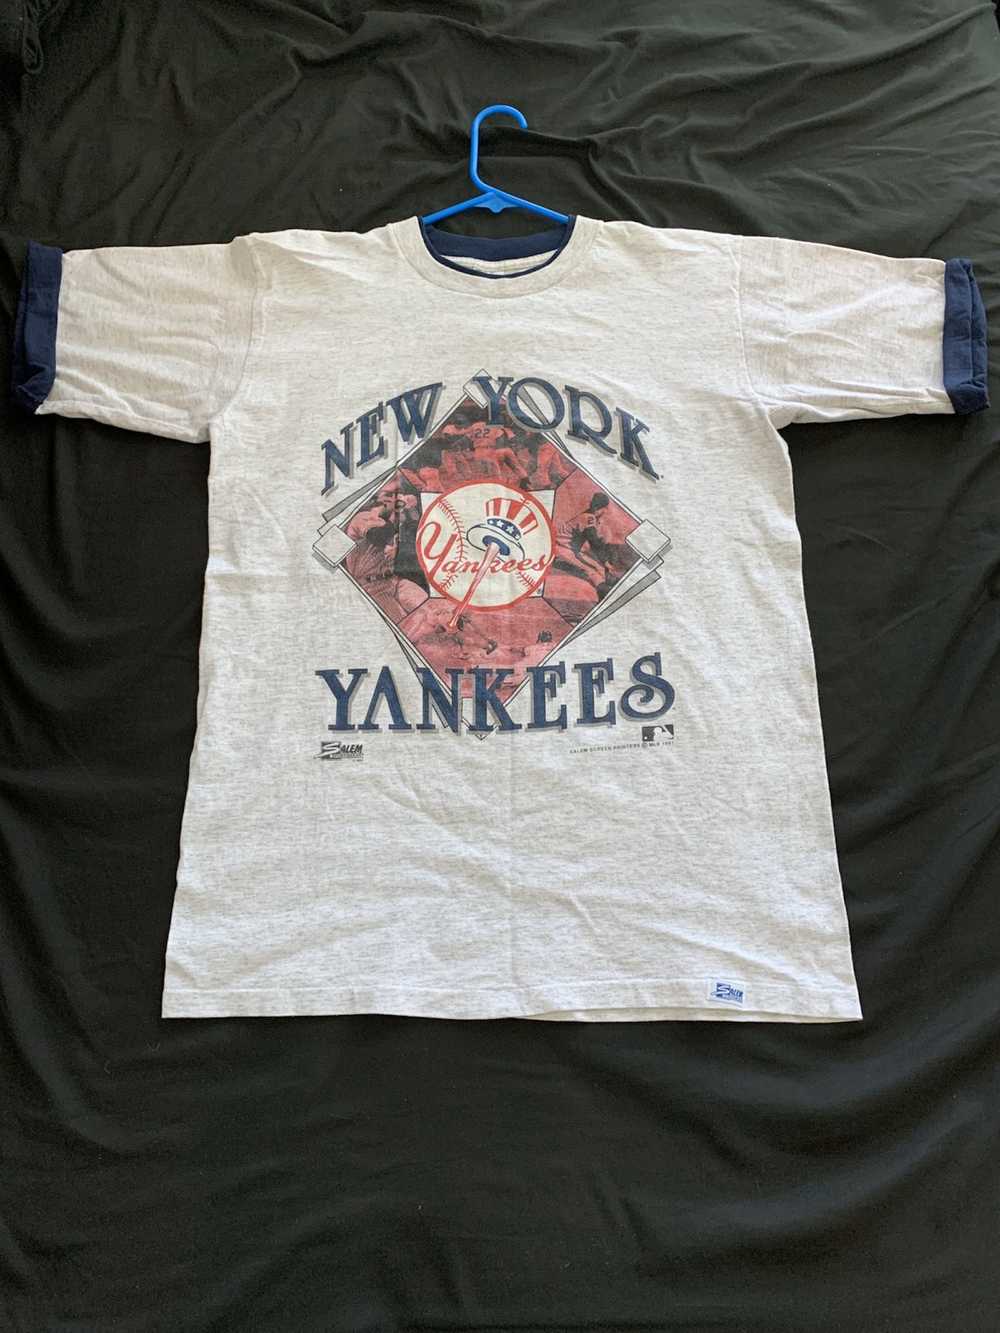 Original nike Yankees Hope Week Helping Others Persevere and Excel 2023  Shirt - Limotees